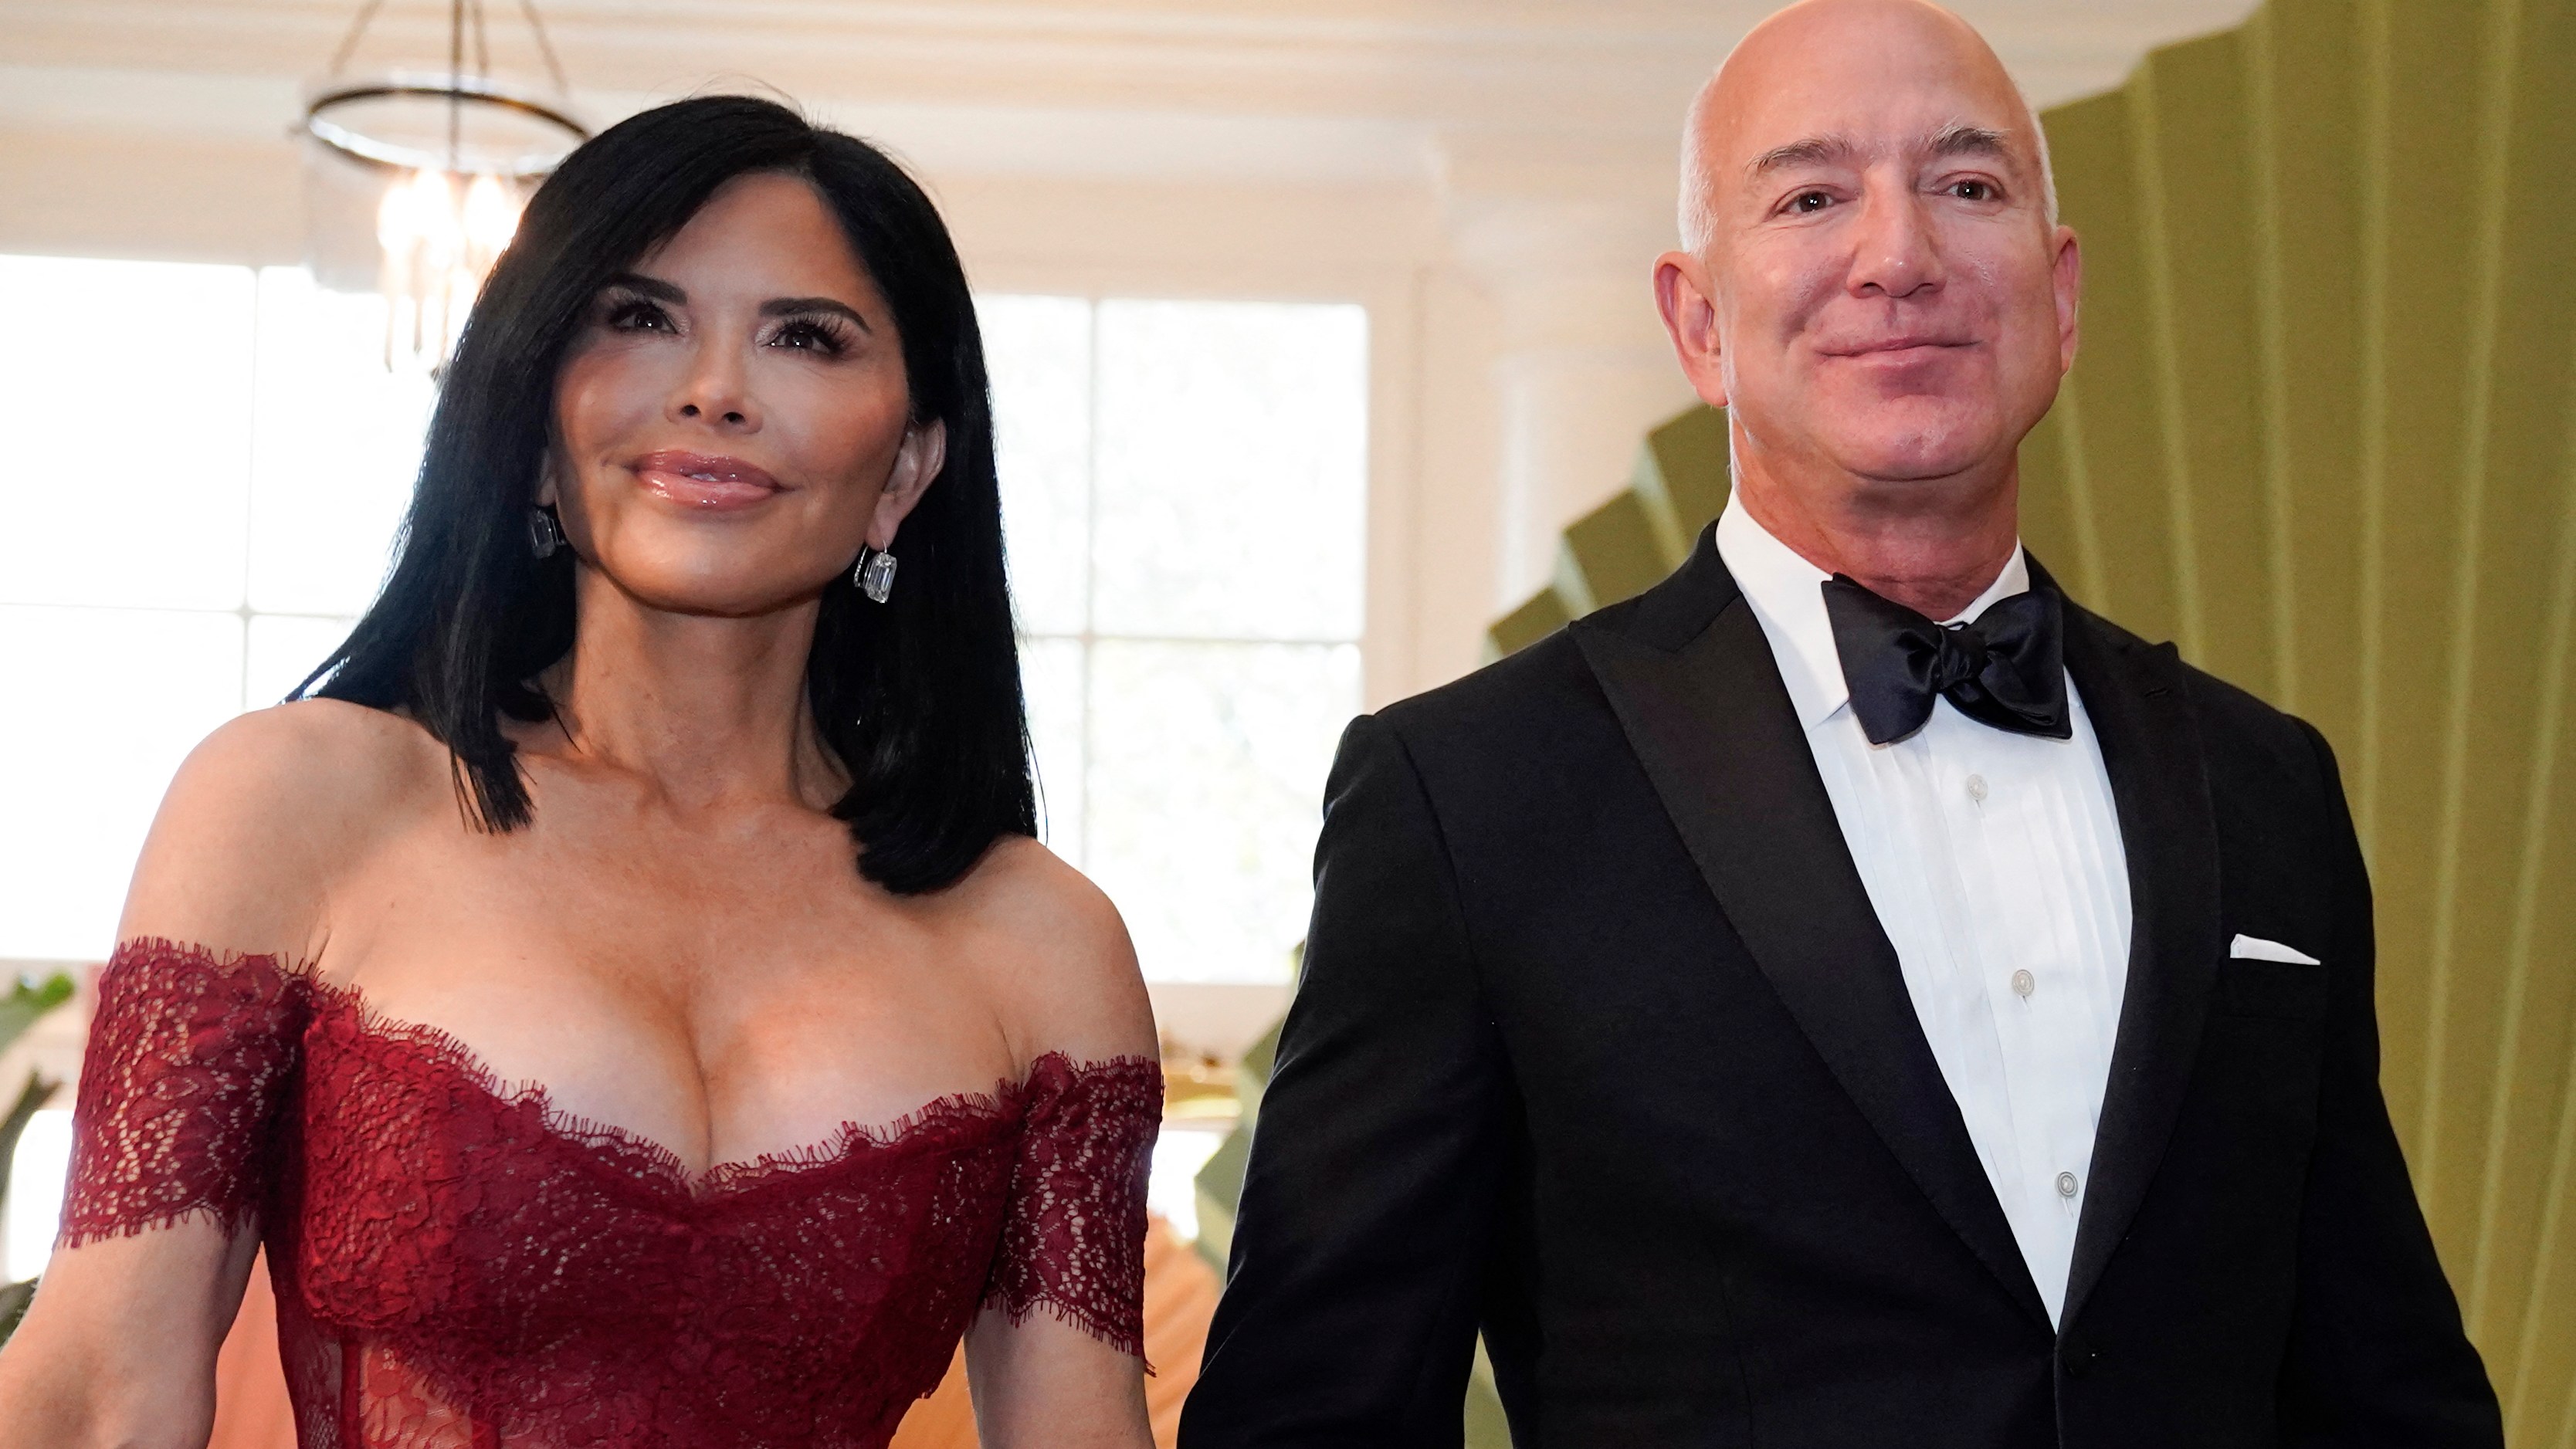 Executive chairman of Amazon Jeff Bezos with fiancée actress Lauren Sanchez